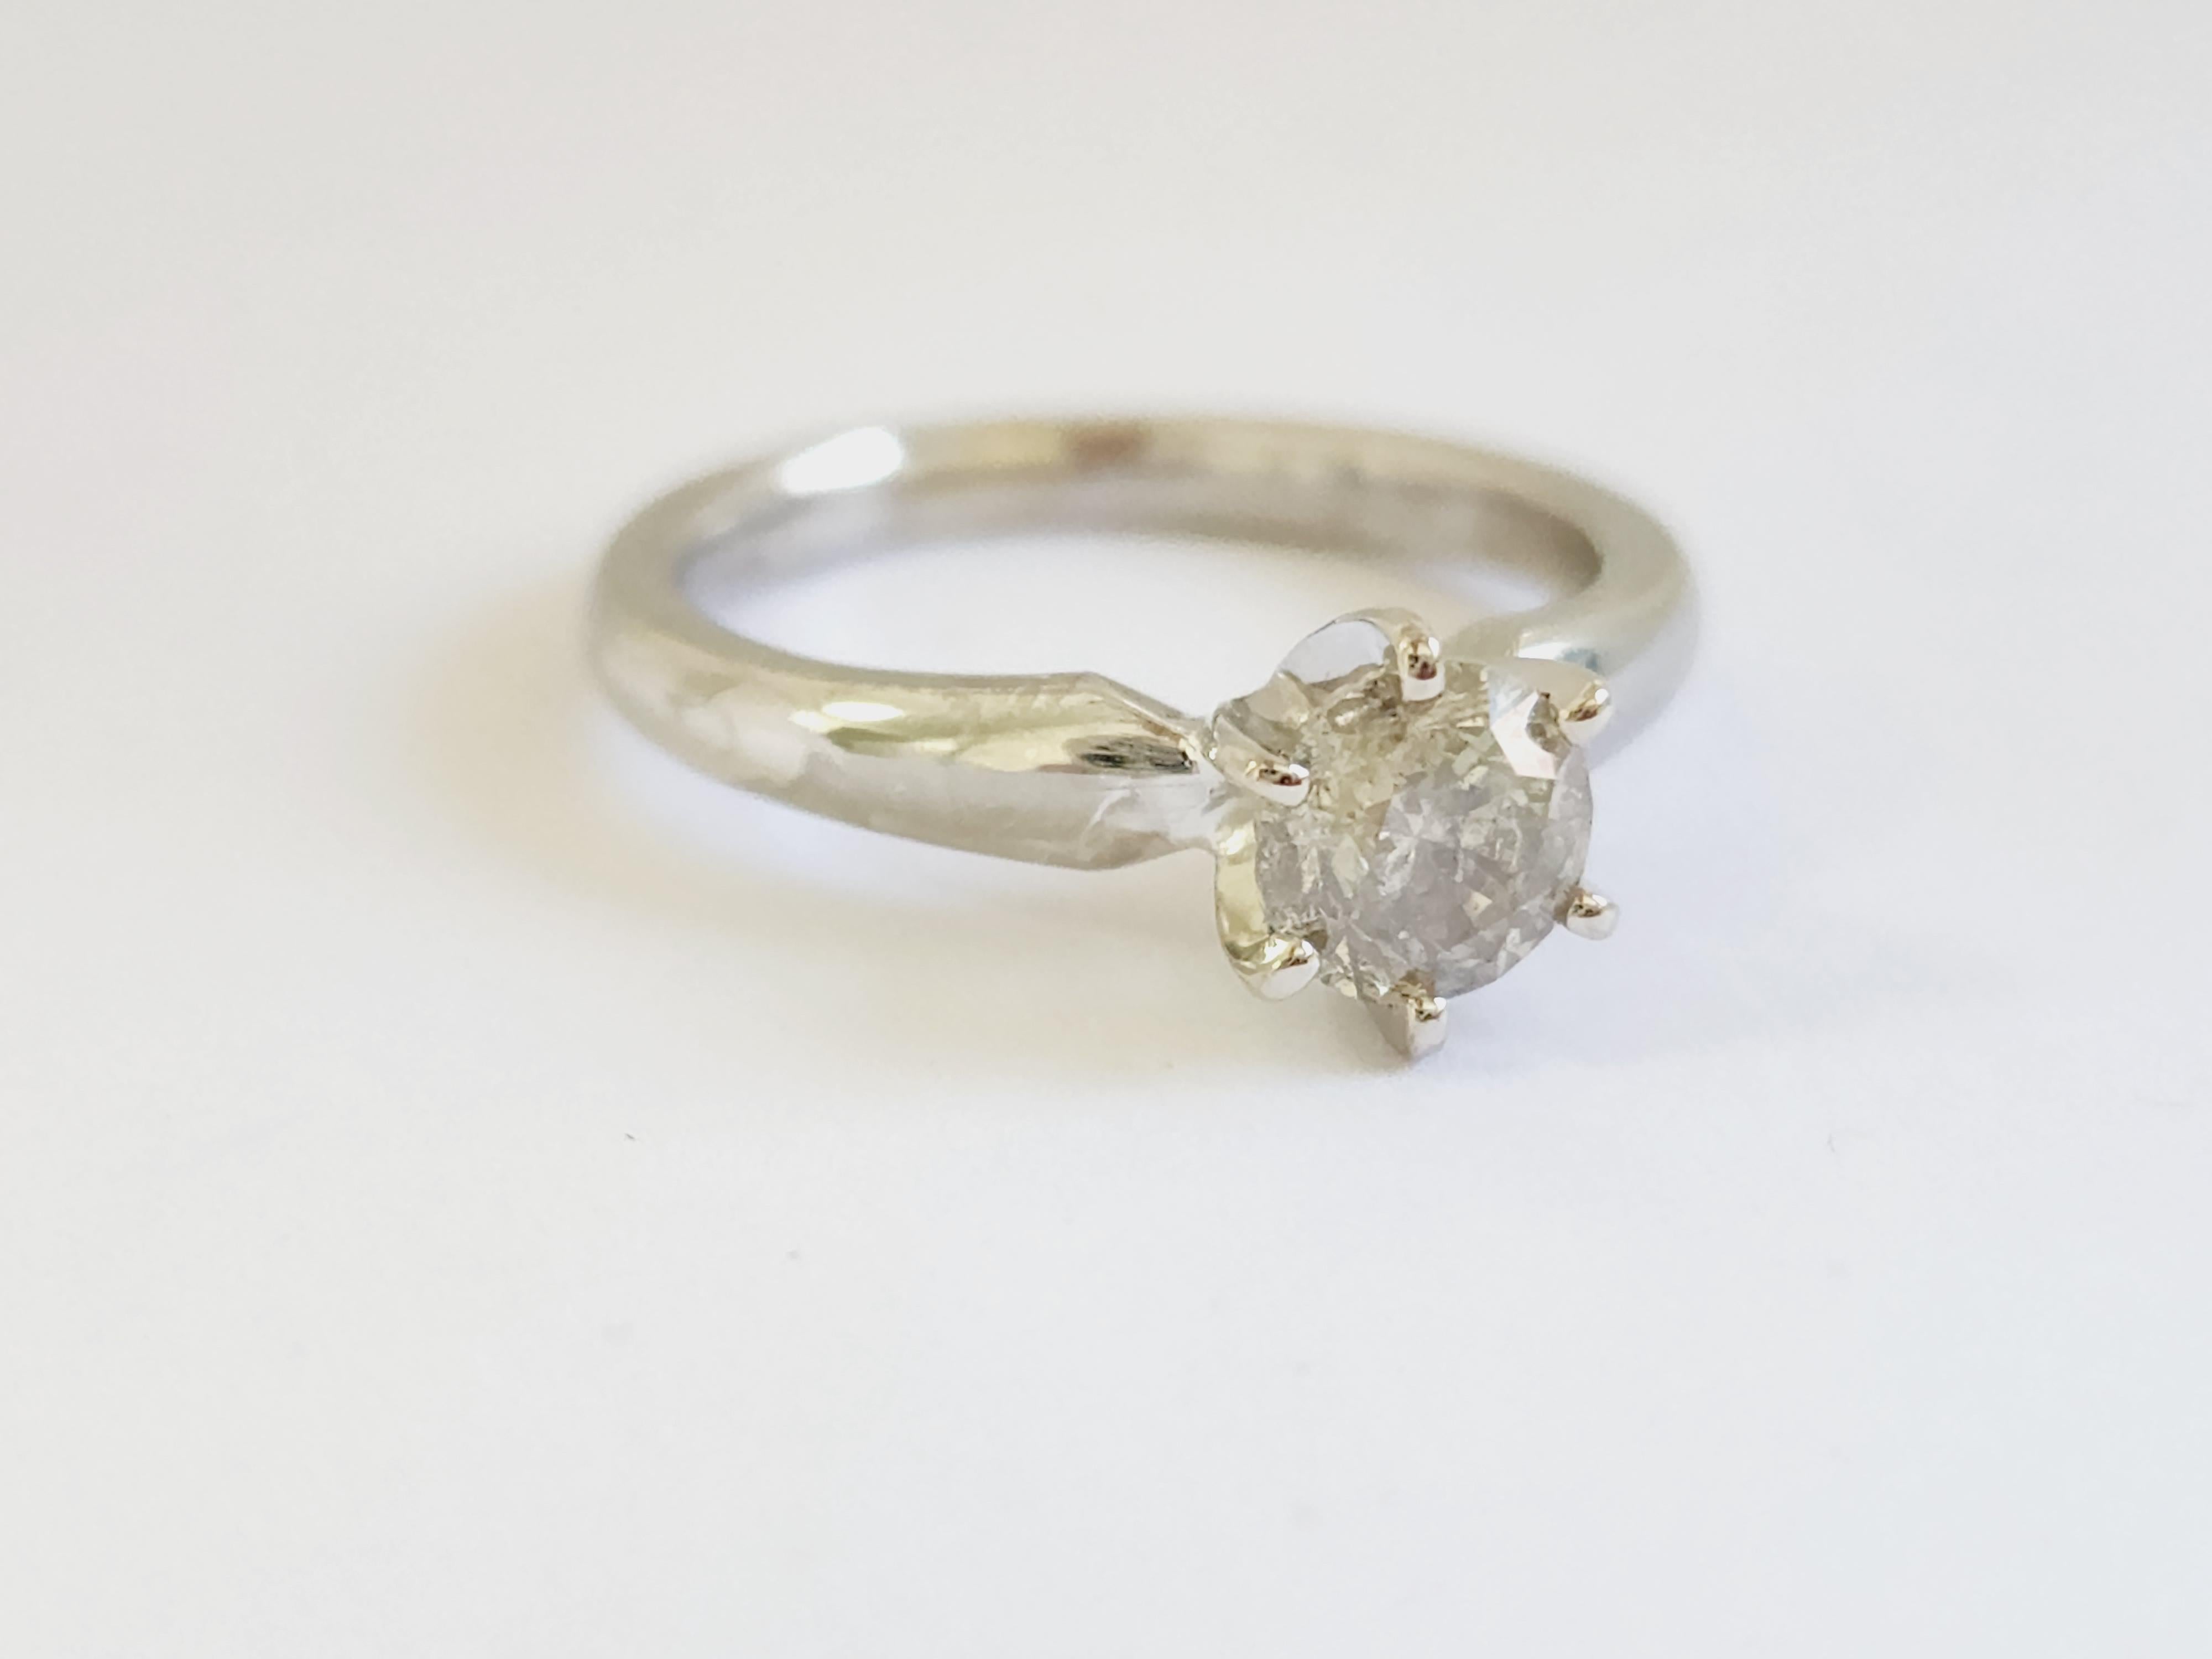 GIA 0.90 Carat Natural Fancy Gray Round Diamond Ring 14 Karat White Gold. Set on 6-prong 14K Solitaire white gold ring.
Ring size: 6.5